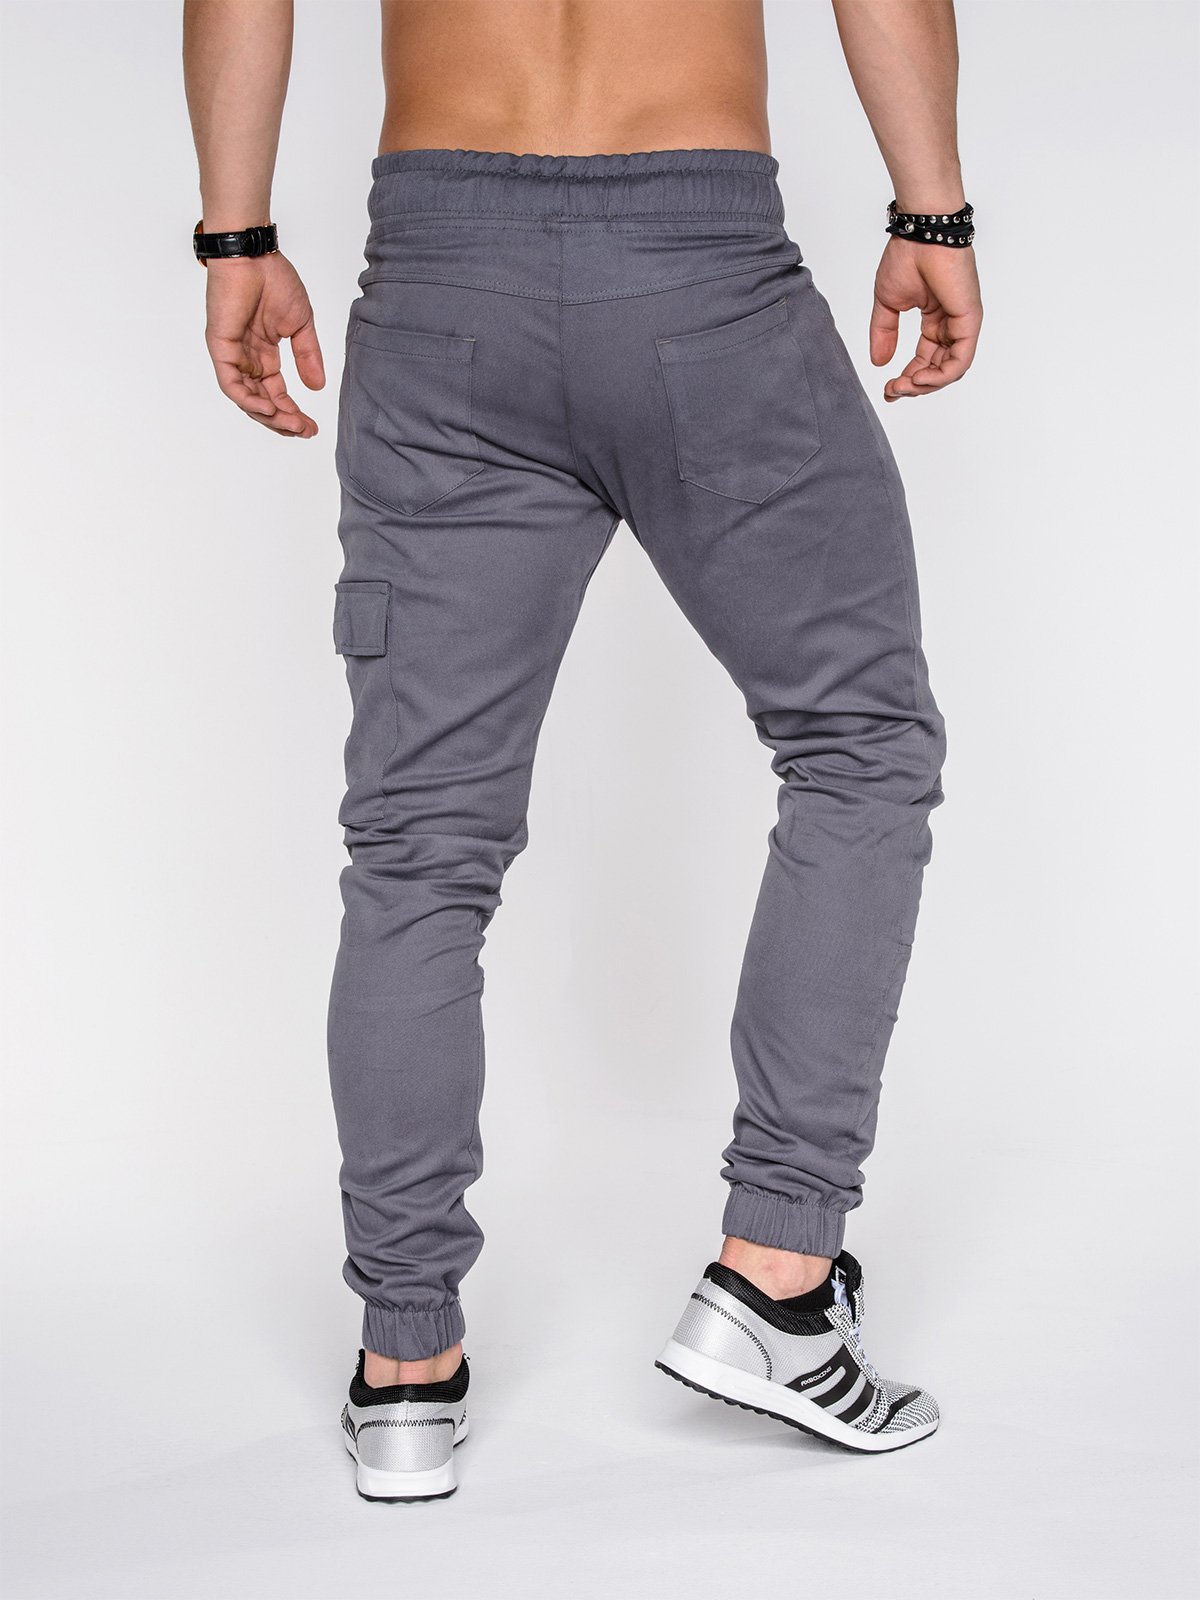 Men's pants joggers P391 - dark grey | MODONE wholesale - Clothing For Men